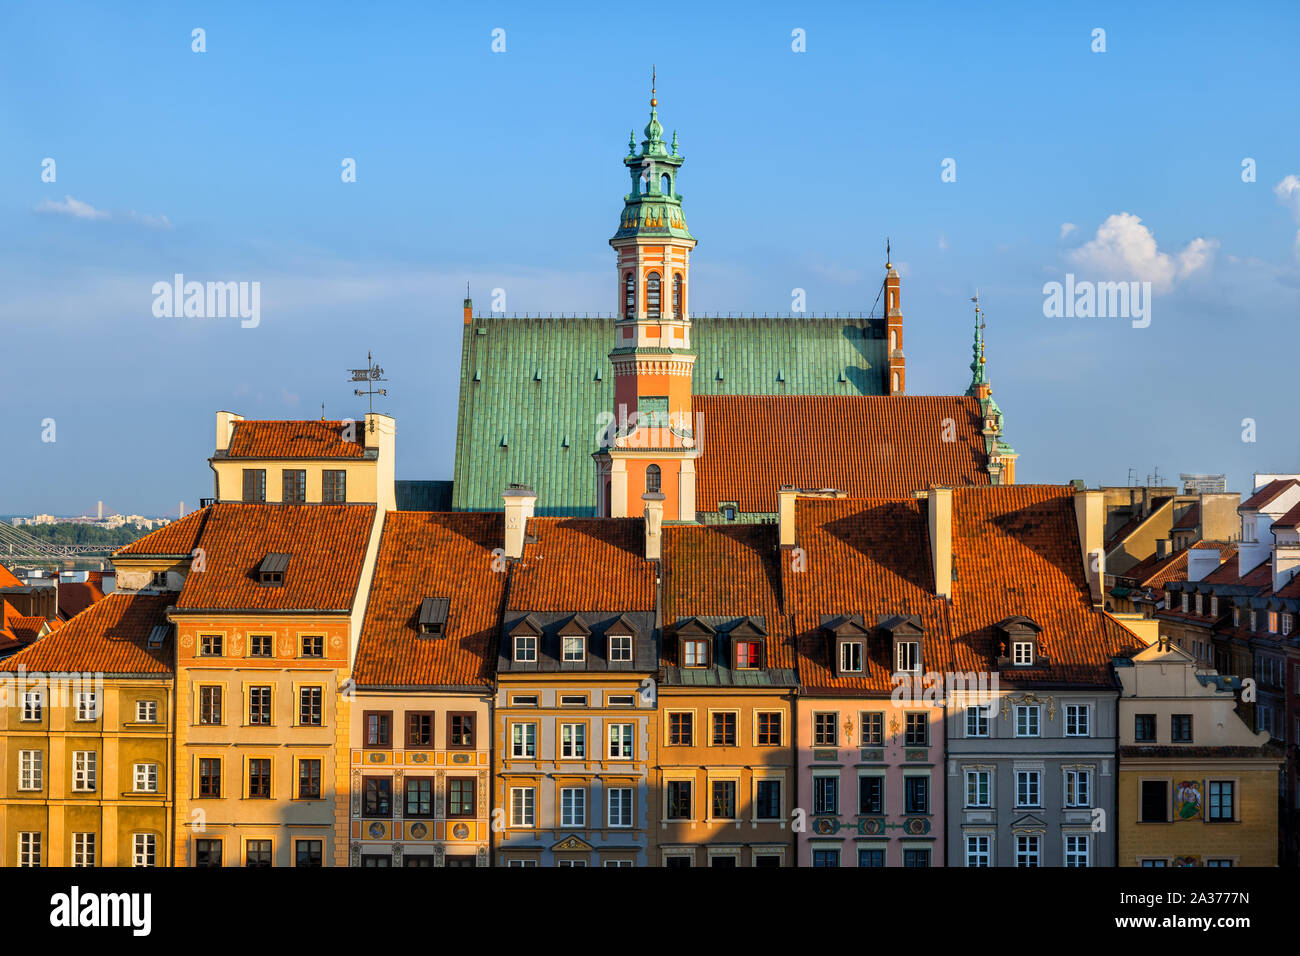 Die Altstadt - Stadt der Warschauer Altstadt in Polen. Bunte traditionelle Häuser und Kirchen, UNESCO-Weltkulturerbe. Stockfoto